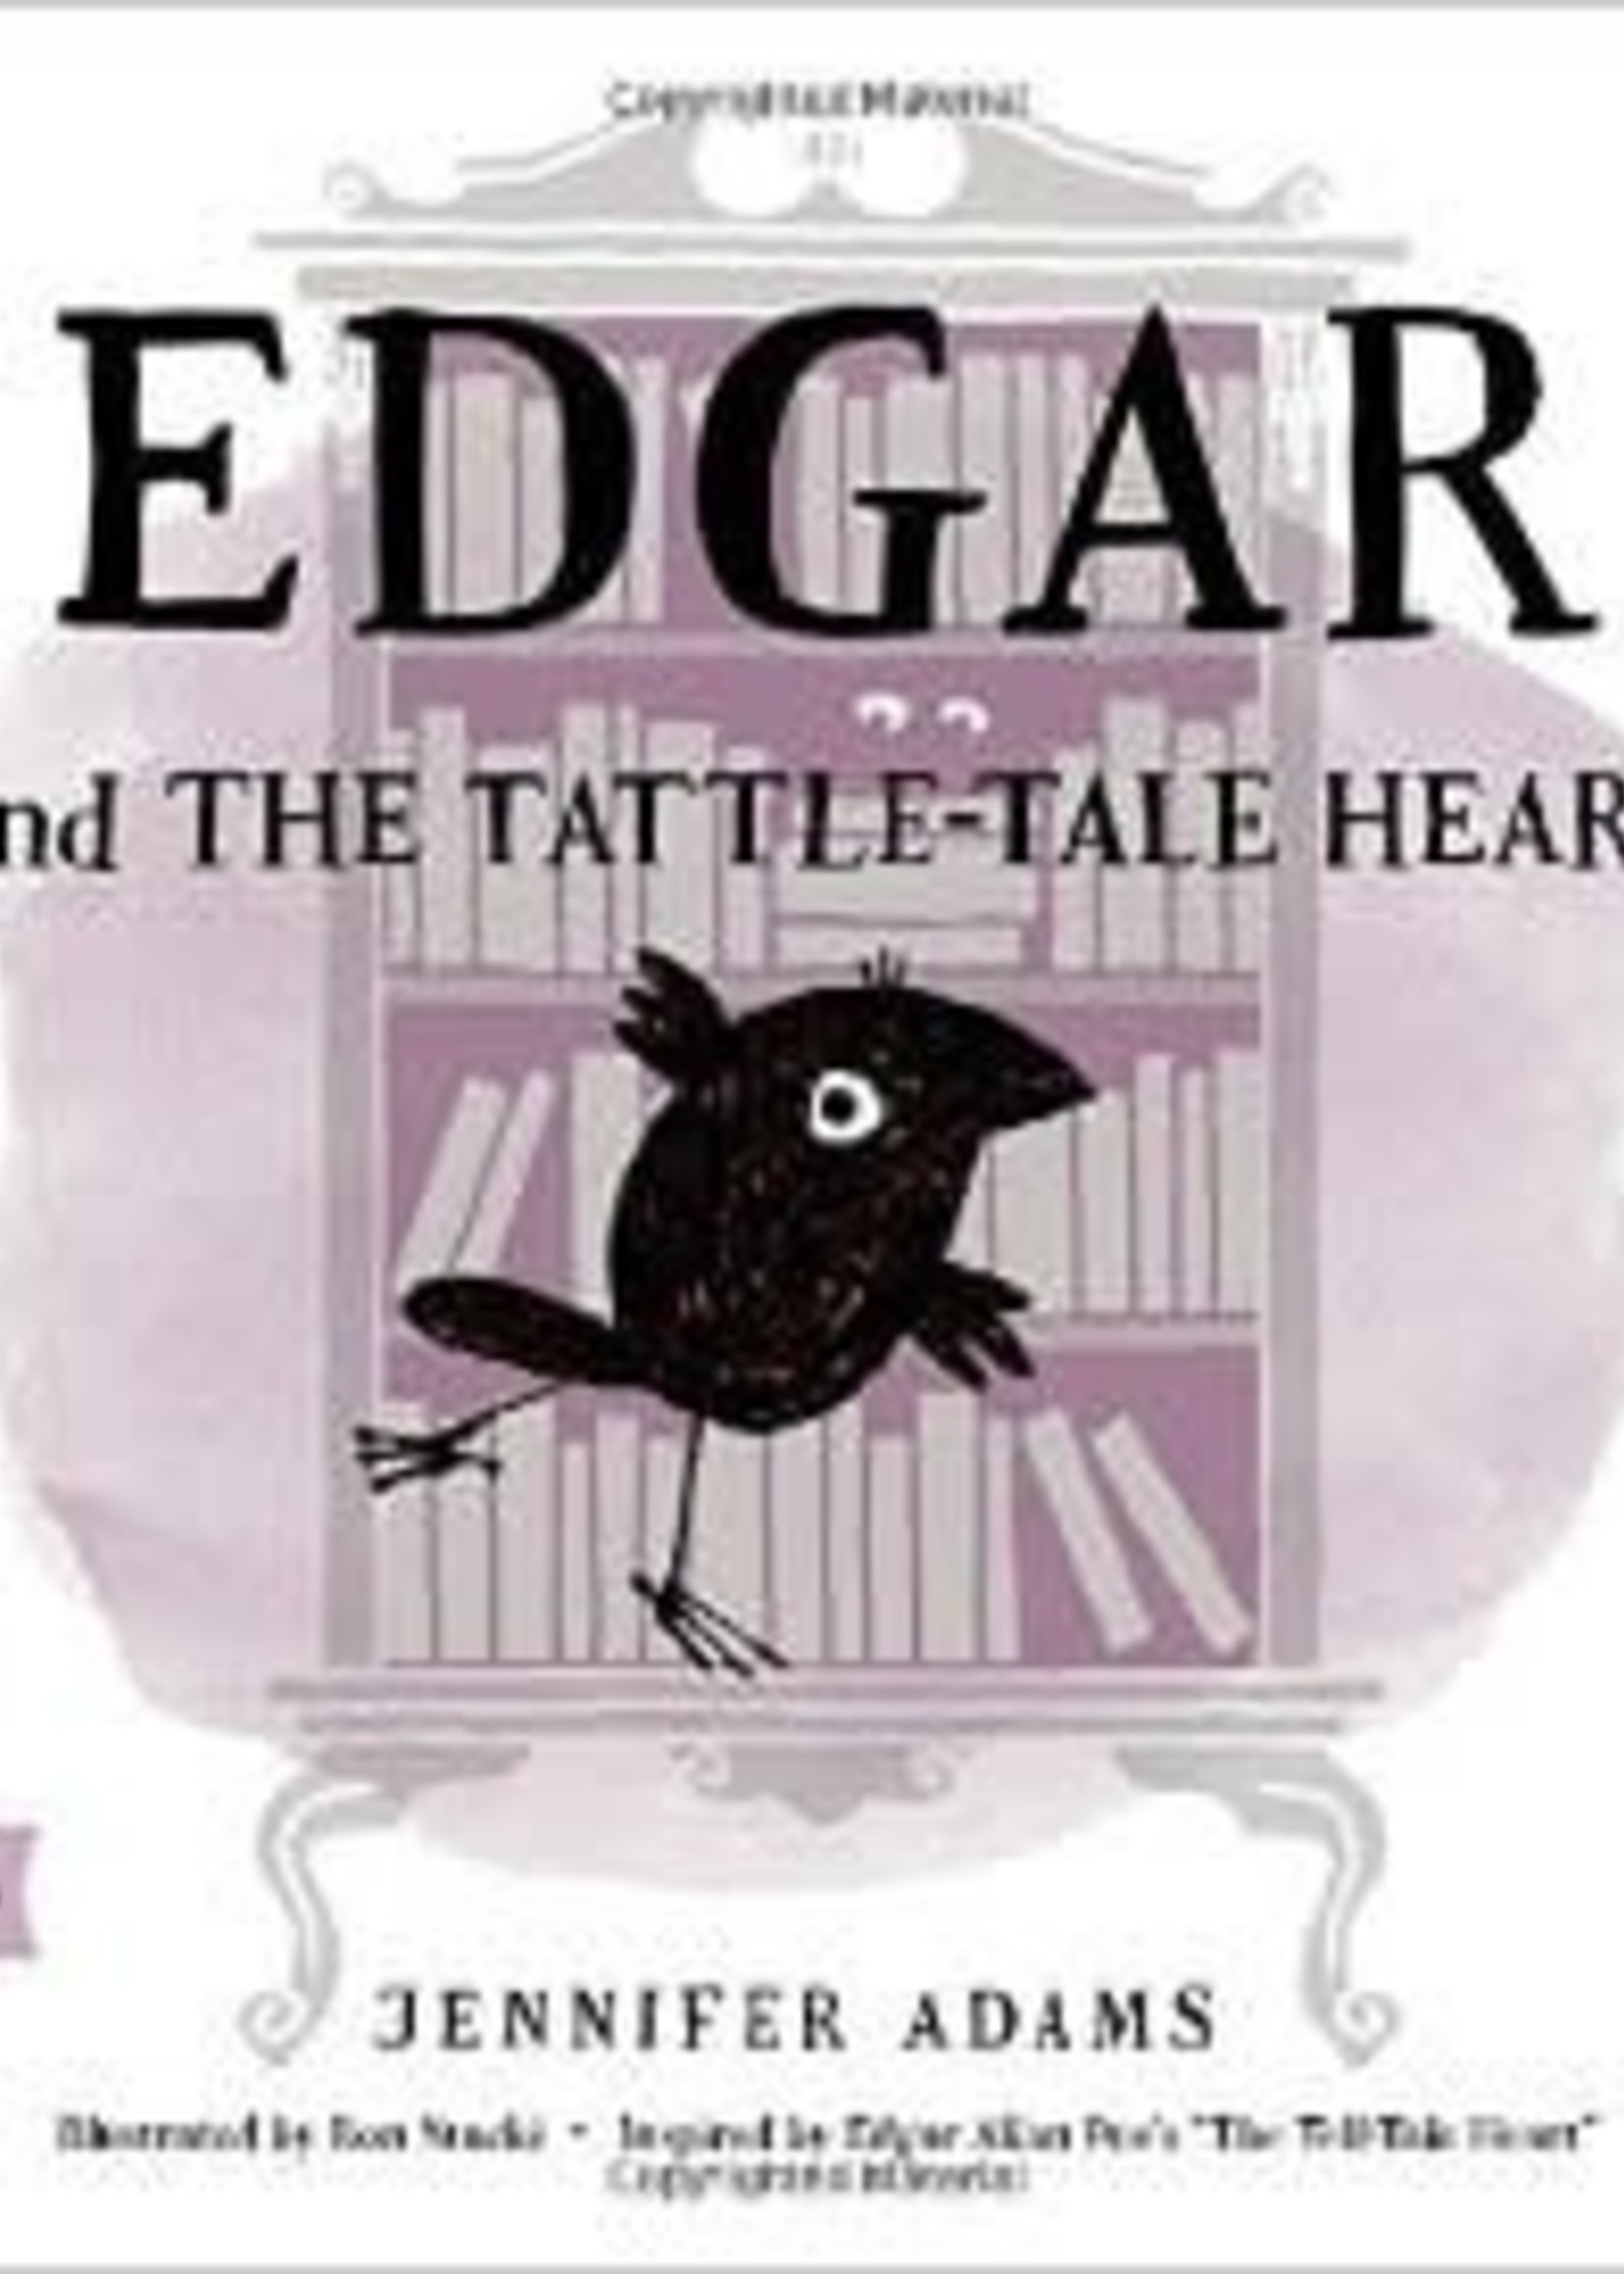 Edgar and the Tattle-Tale Heart by Jennifer Adams,  Ron Stucki